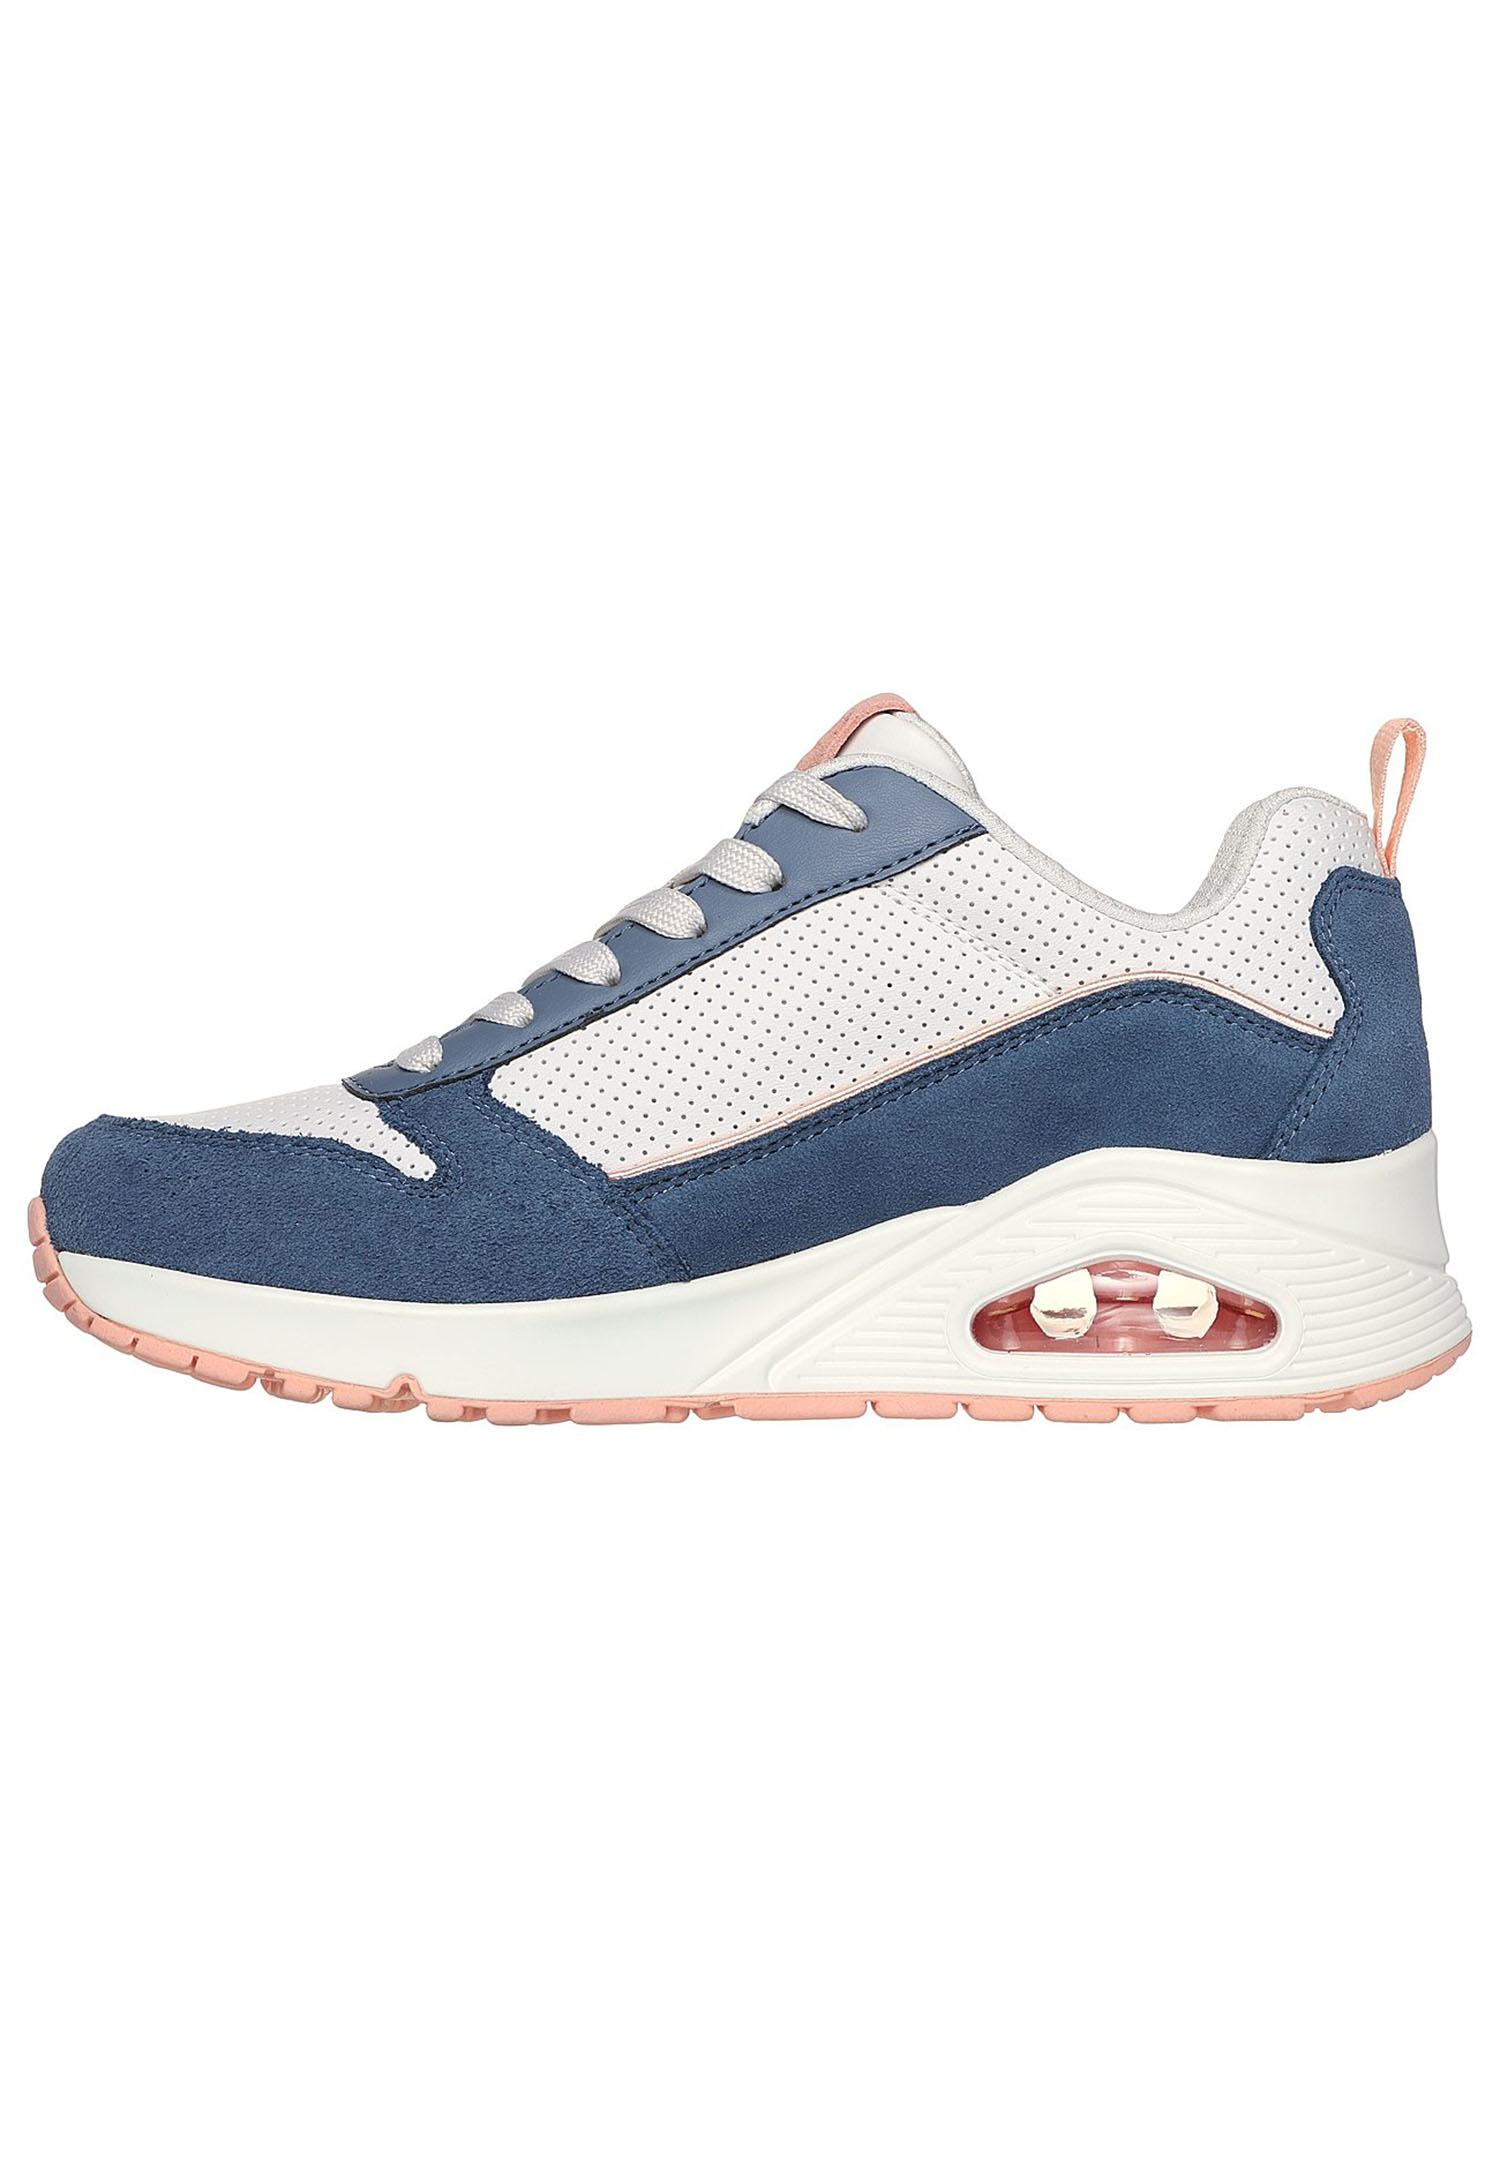 Skecher Street Uno-2 MUCH FUN Damen Sneaker 177105 WBLP blau/pink